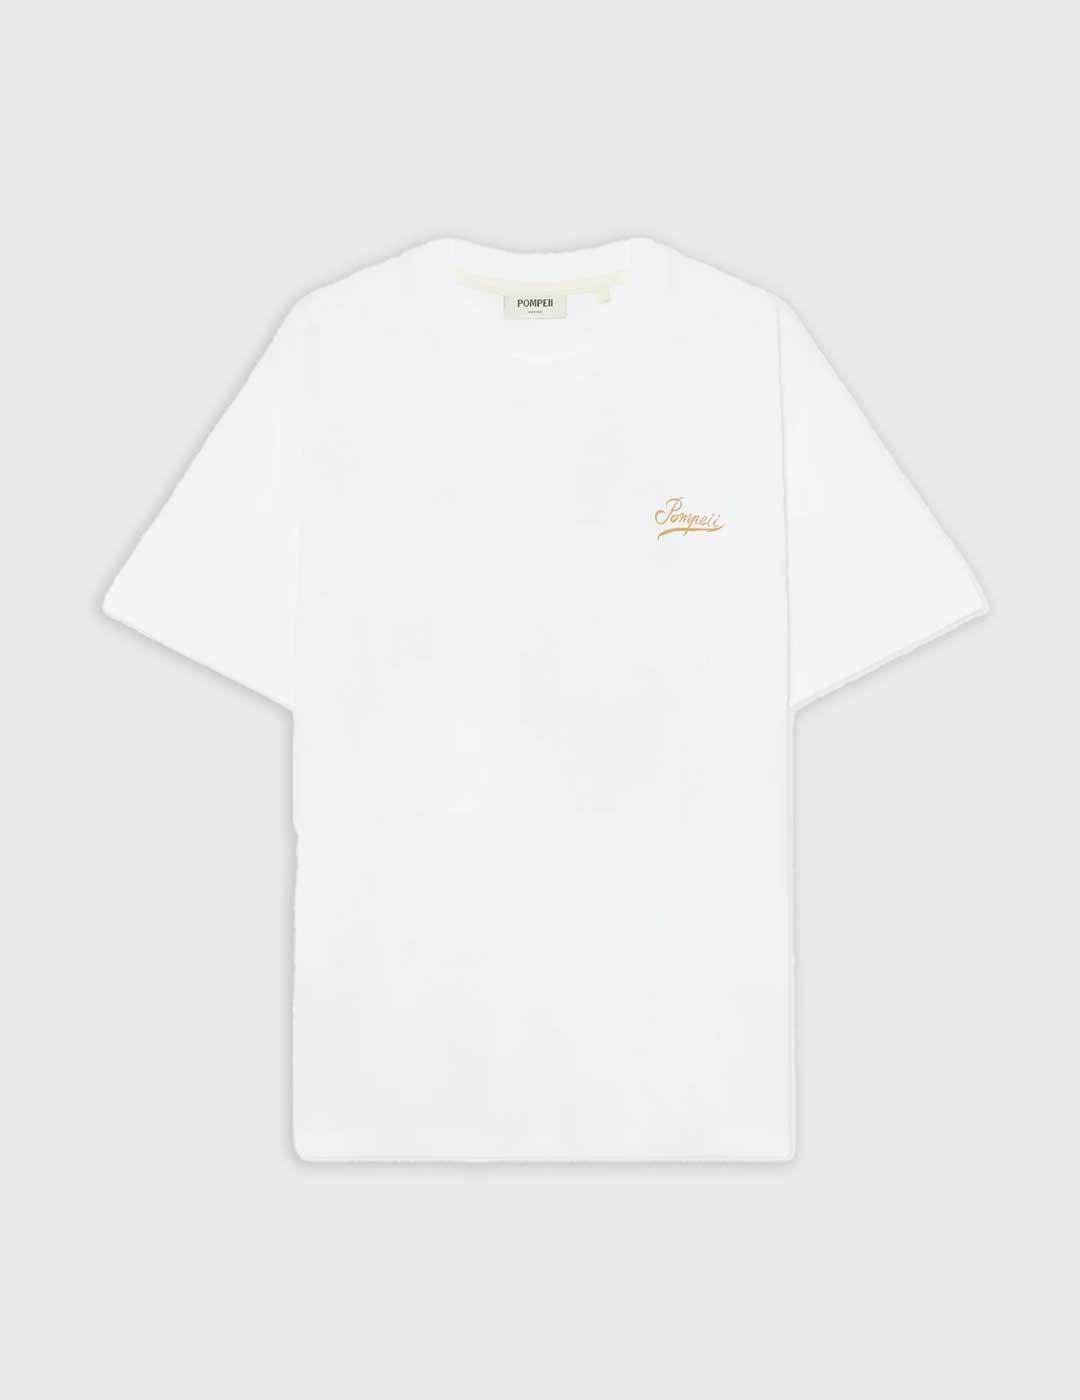 Camiseta Pompeii Brand Small Talk blanca para hombre